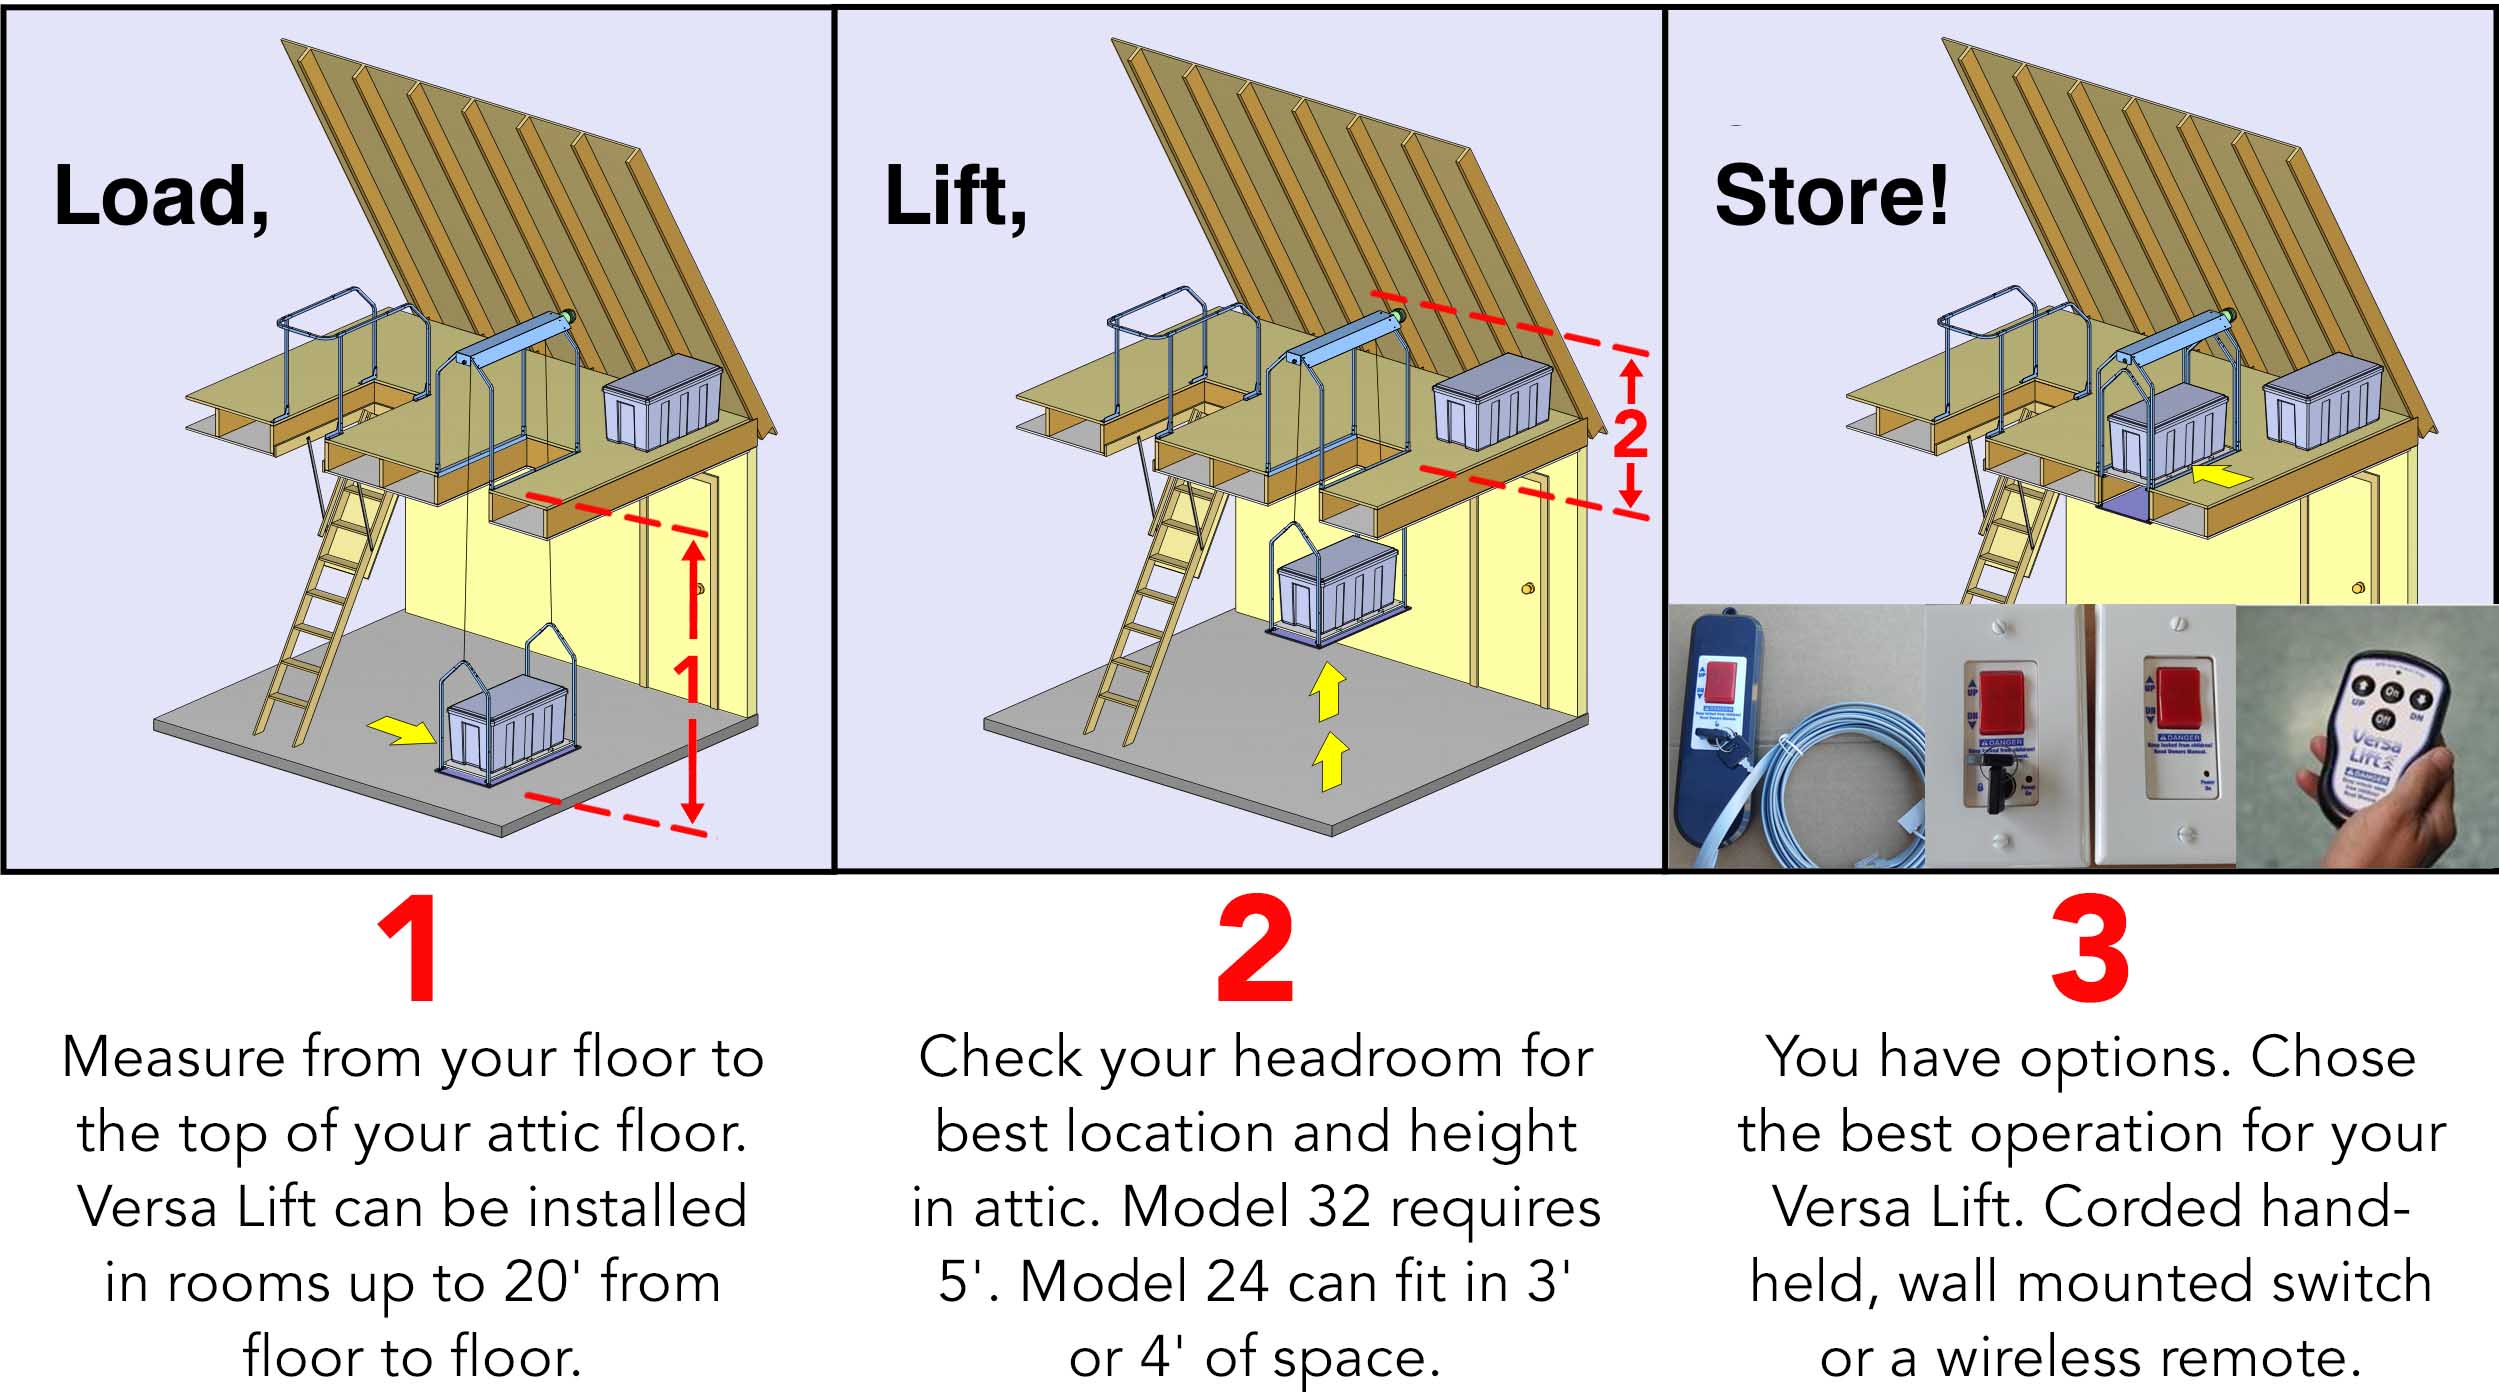 attic graphic steps versa lift 1 2 3 instructions